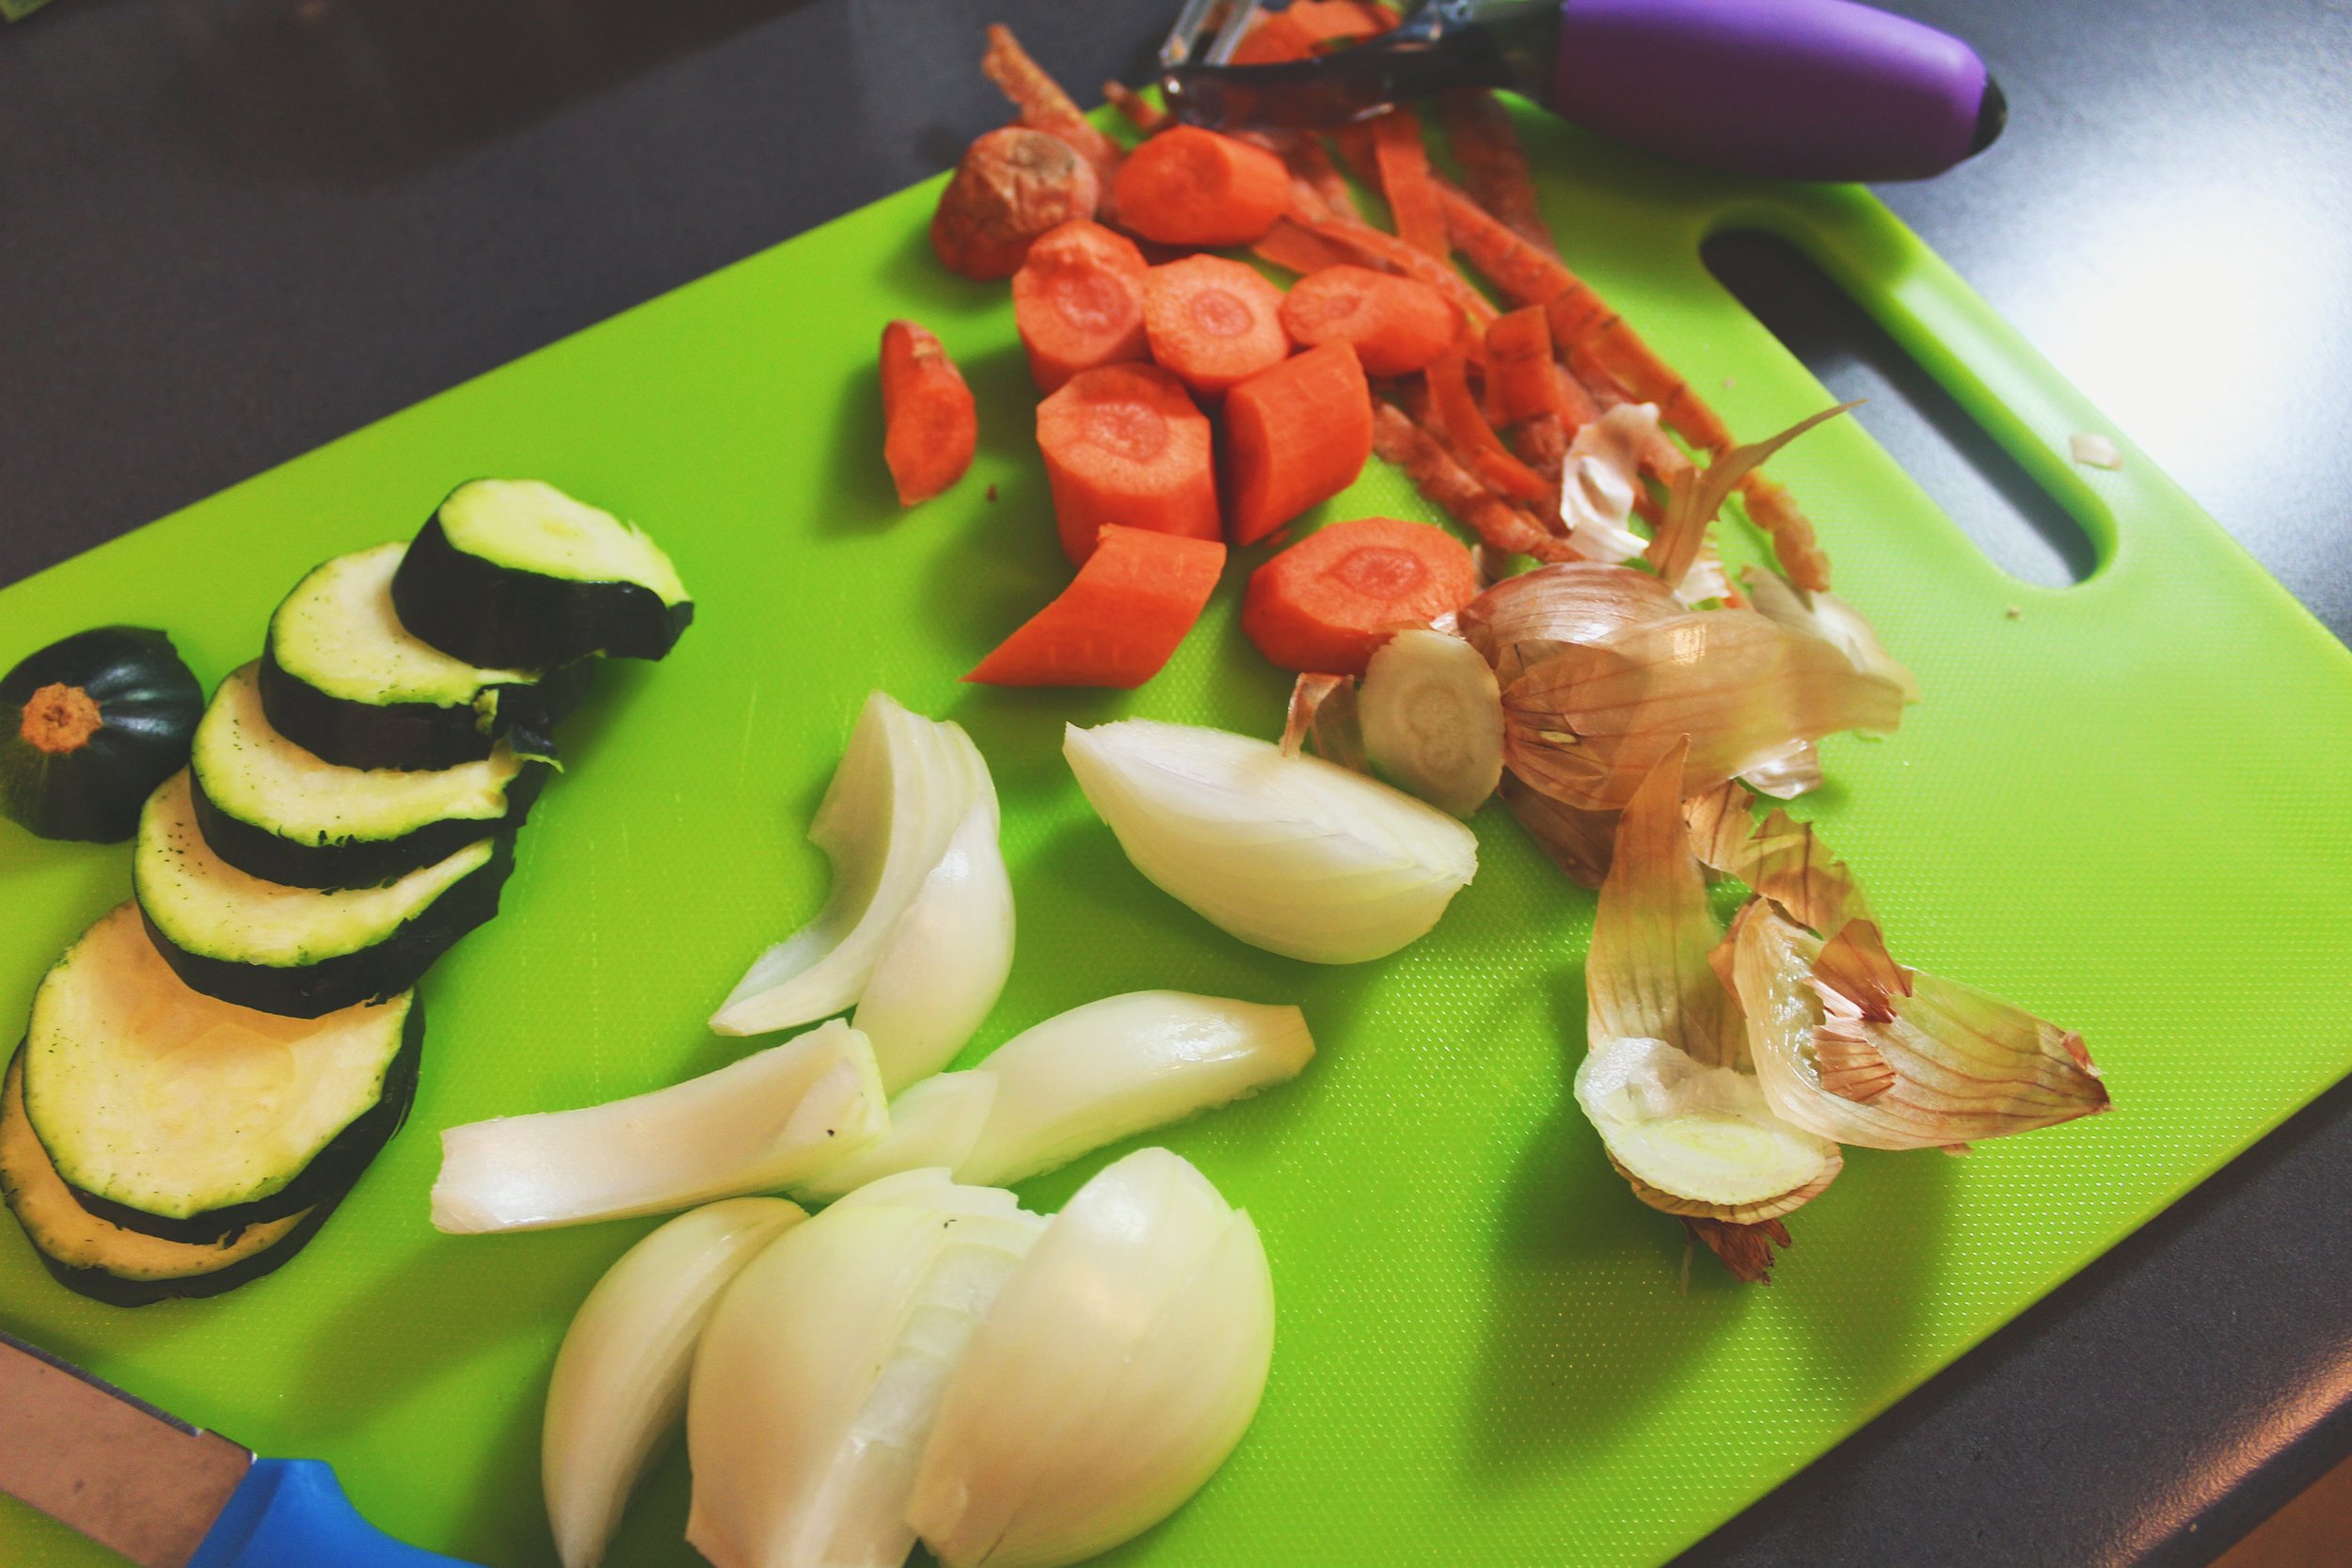 Zucchini goes perfectly with pesto and garlic.  الكوسا كتير بتزبط مع البيستو والثوم.